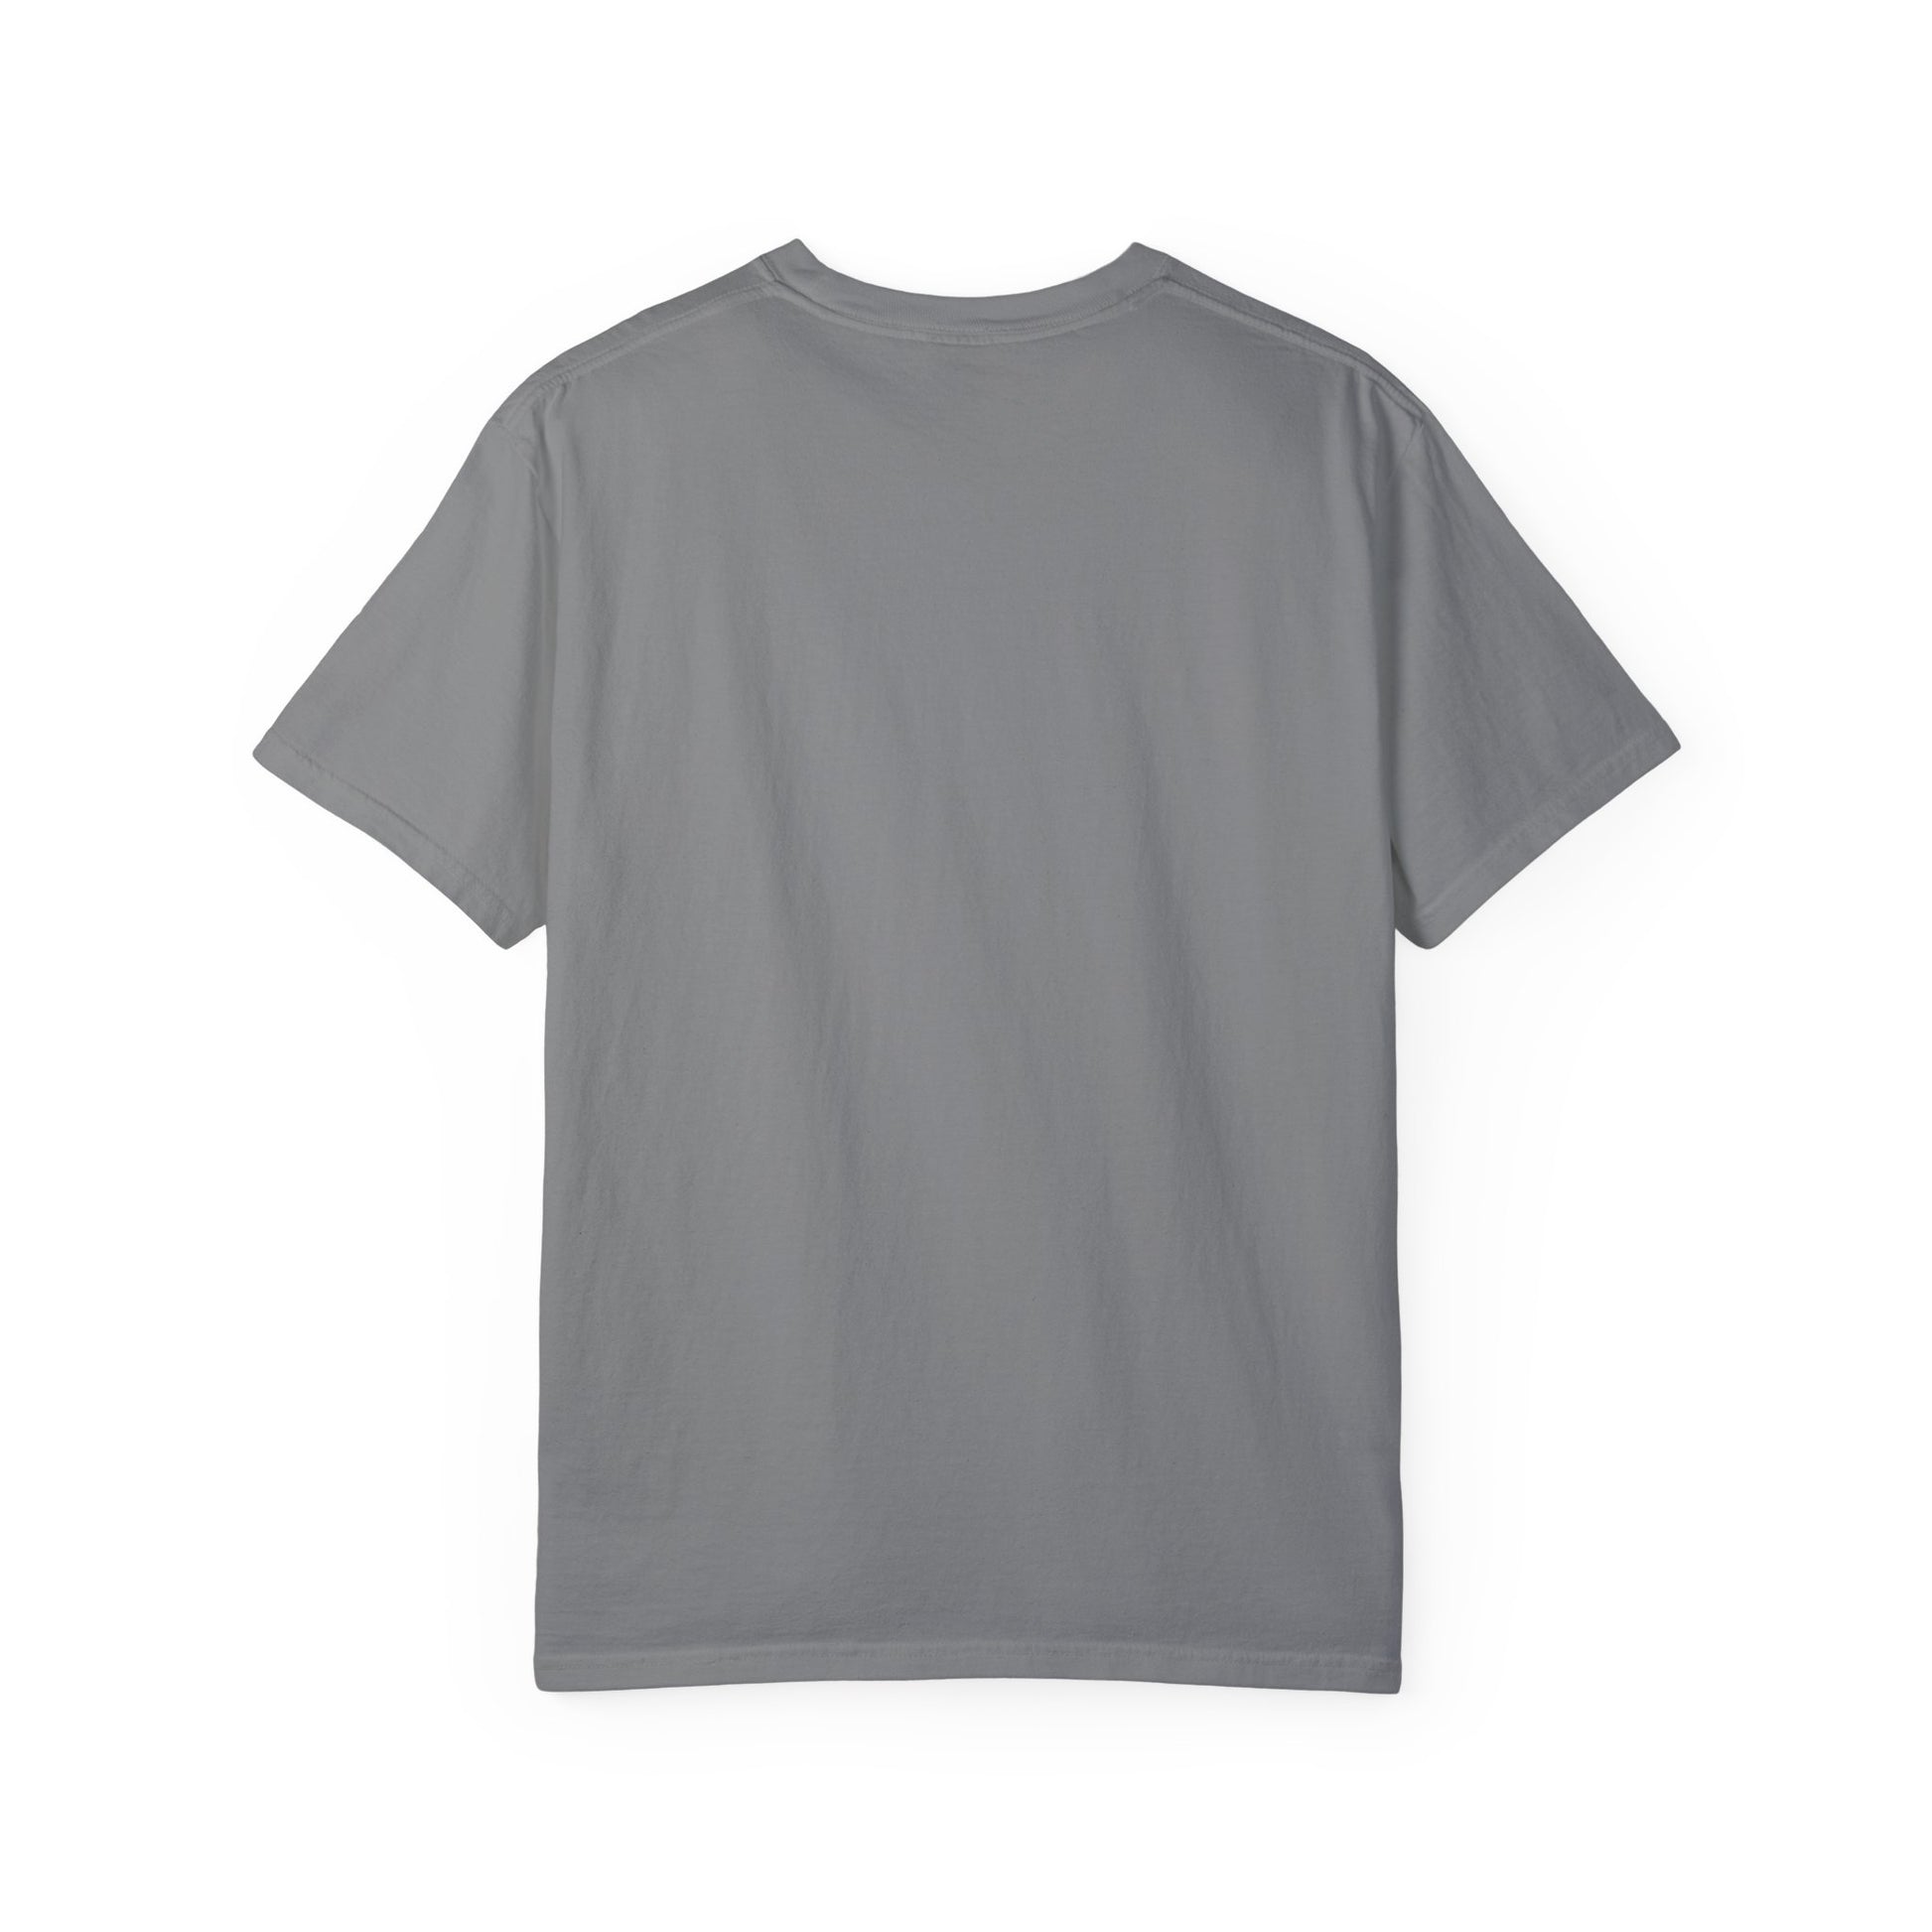 Lion Head Cool Graphic Design Novelty Unisex Garment-dyed T-shirt Cotton Funny Humorous Graphic Soft Premium Unisex Men Women Grey T-shirt Birthday Gift-40